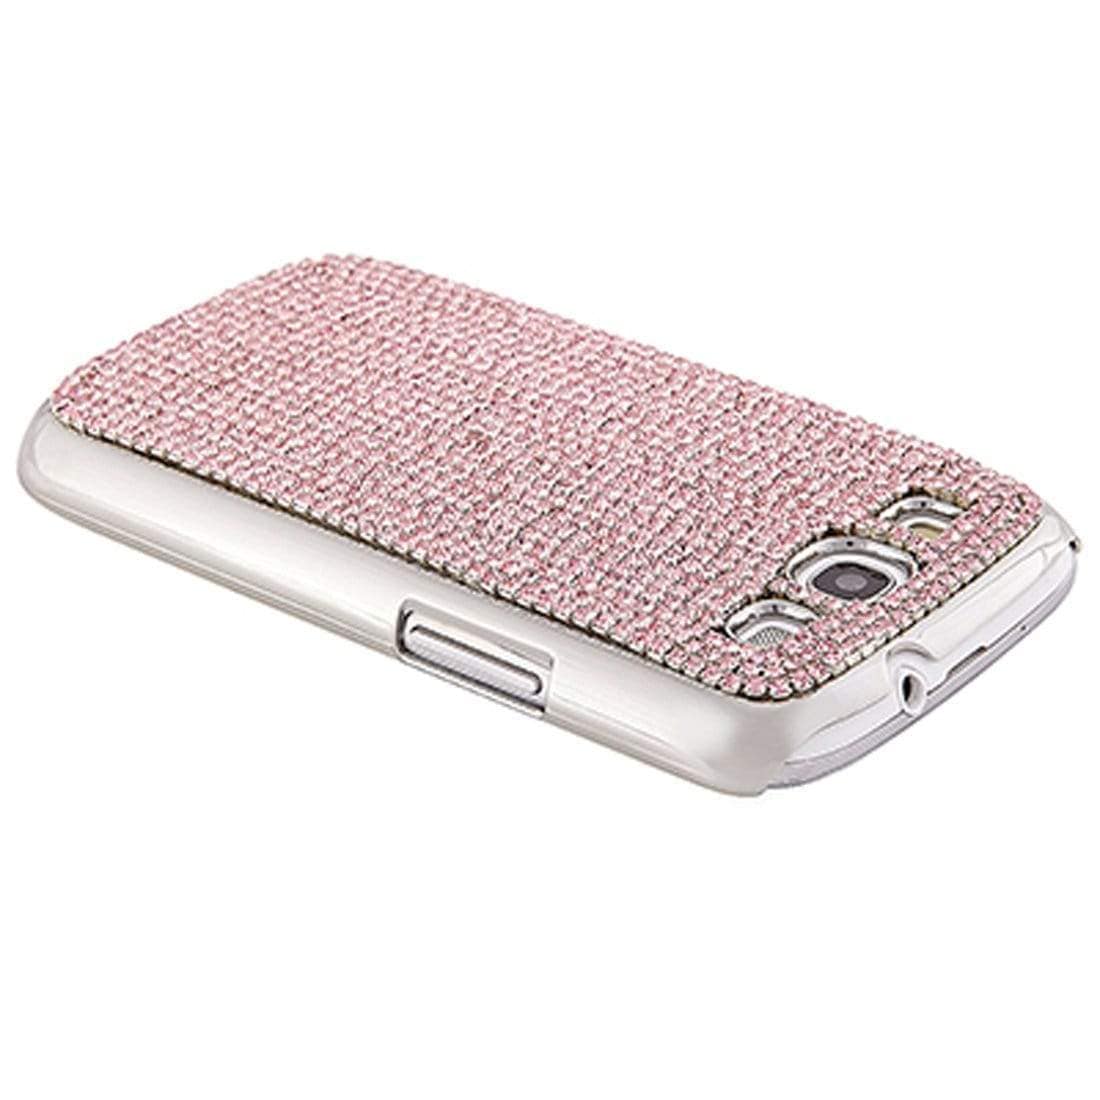 Kalifano Samsung Galaxy SPCG-005C-R - Galaxy S3 Cover with Rose Crystals SPCG-005C-R